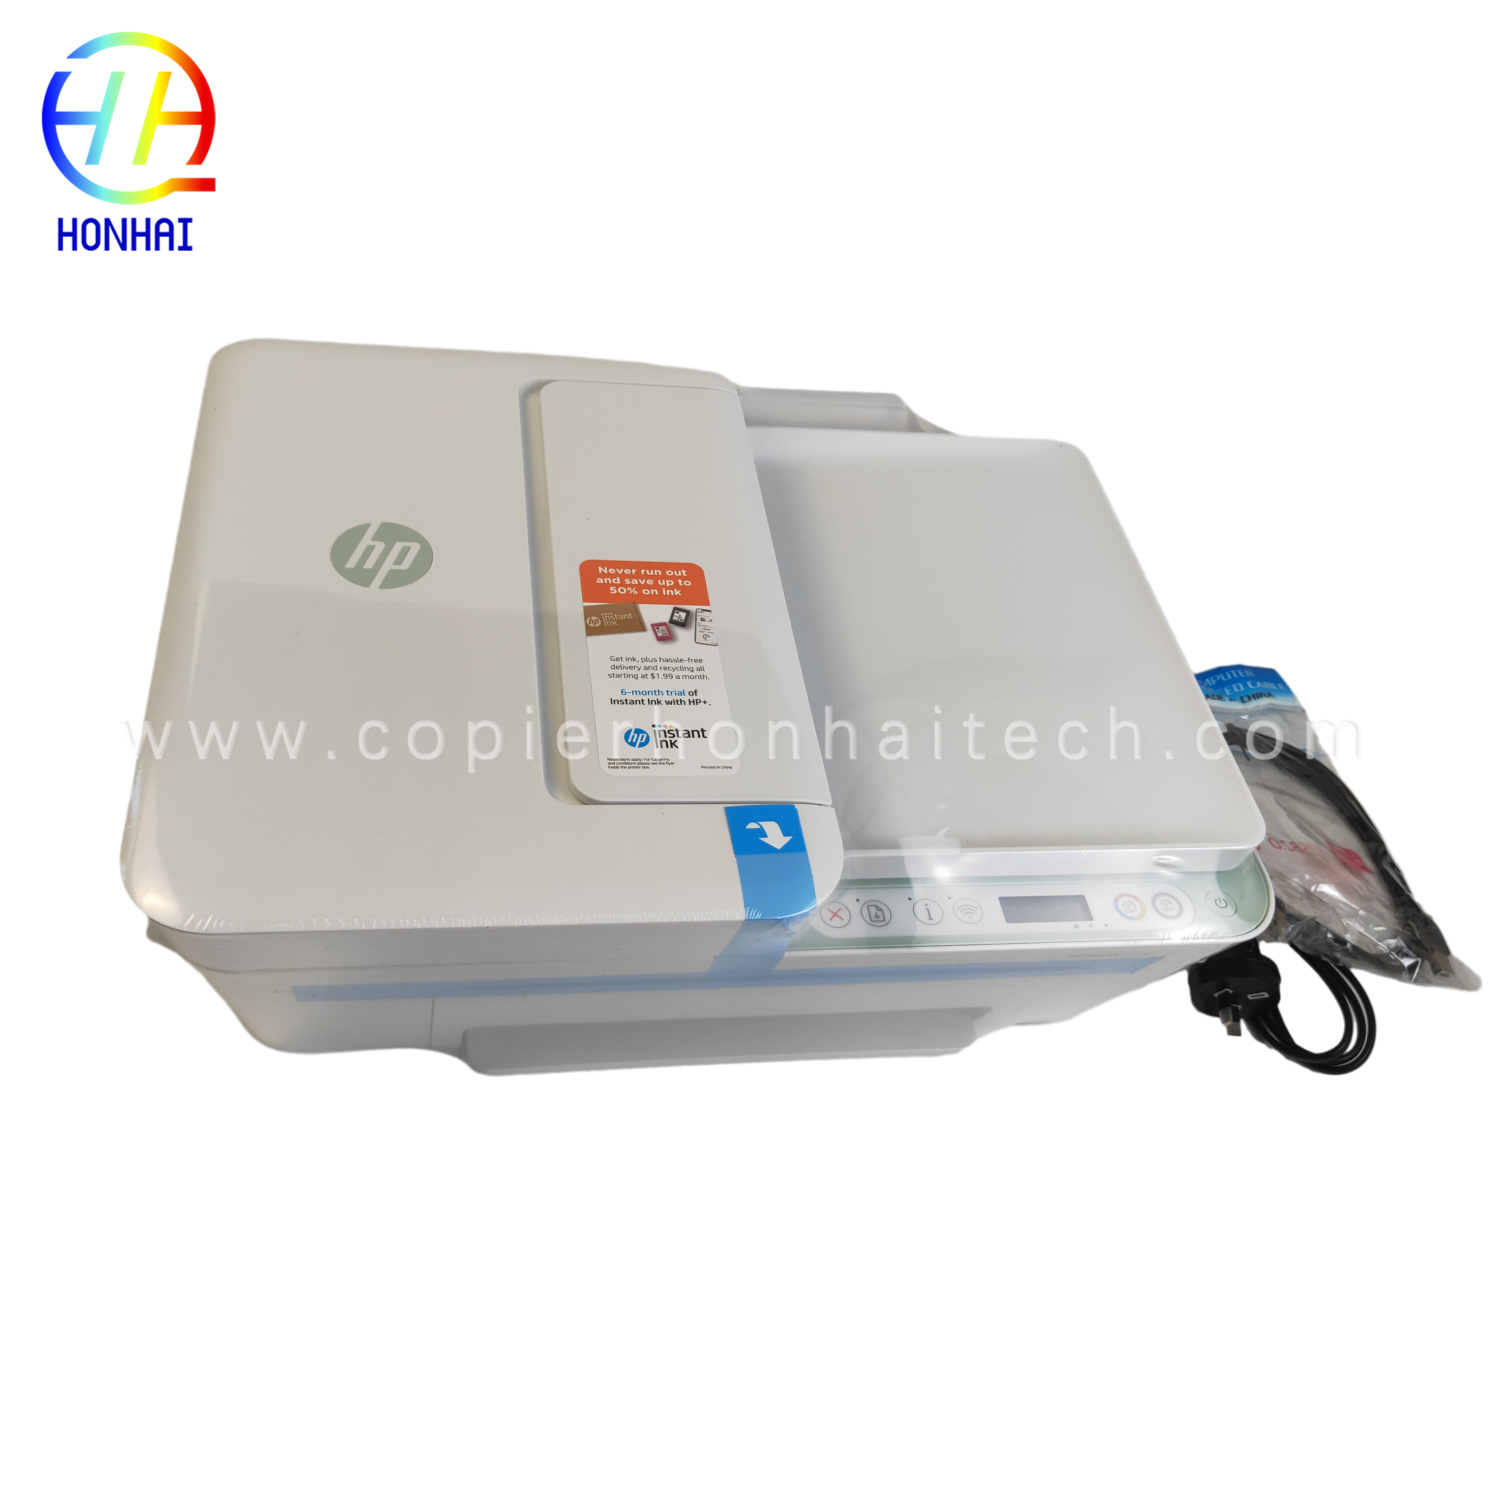 https://www.copierhonhaitech.com/original-new-wireless-printer-for-hp-deskjet-4122e-all-in-one-printer-scan-and-copy-home-office-students-and-home- stampante-26q96a-produttu/